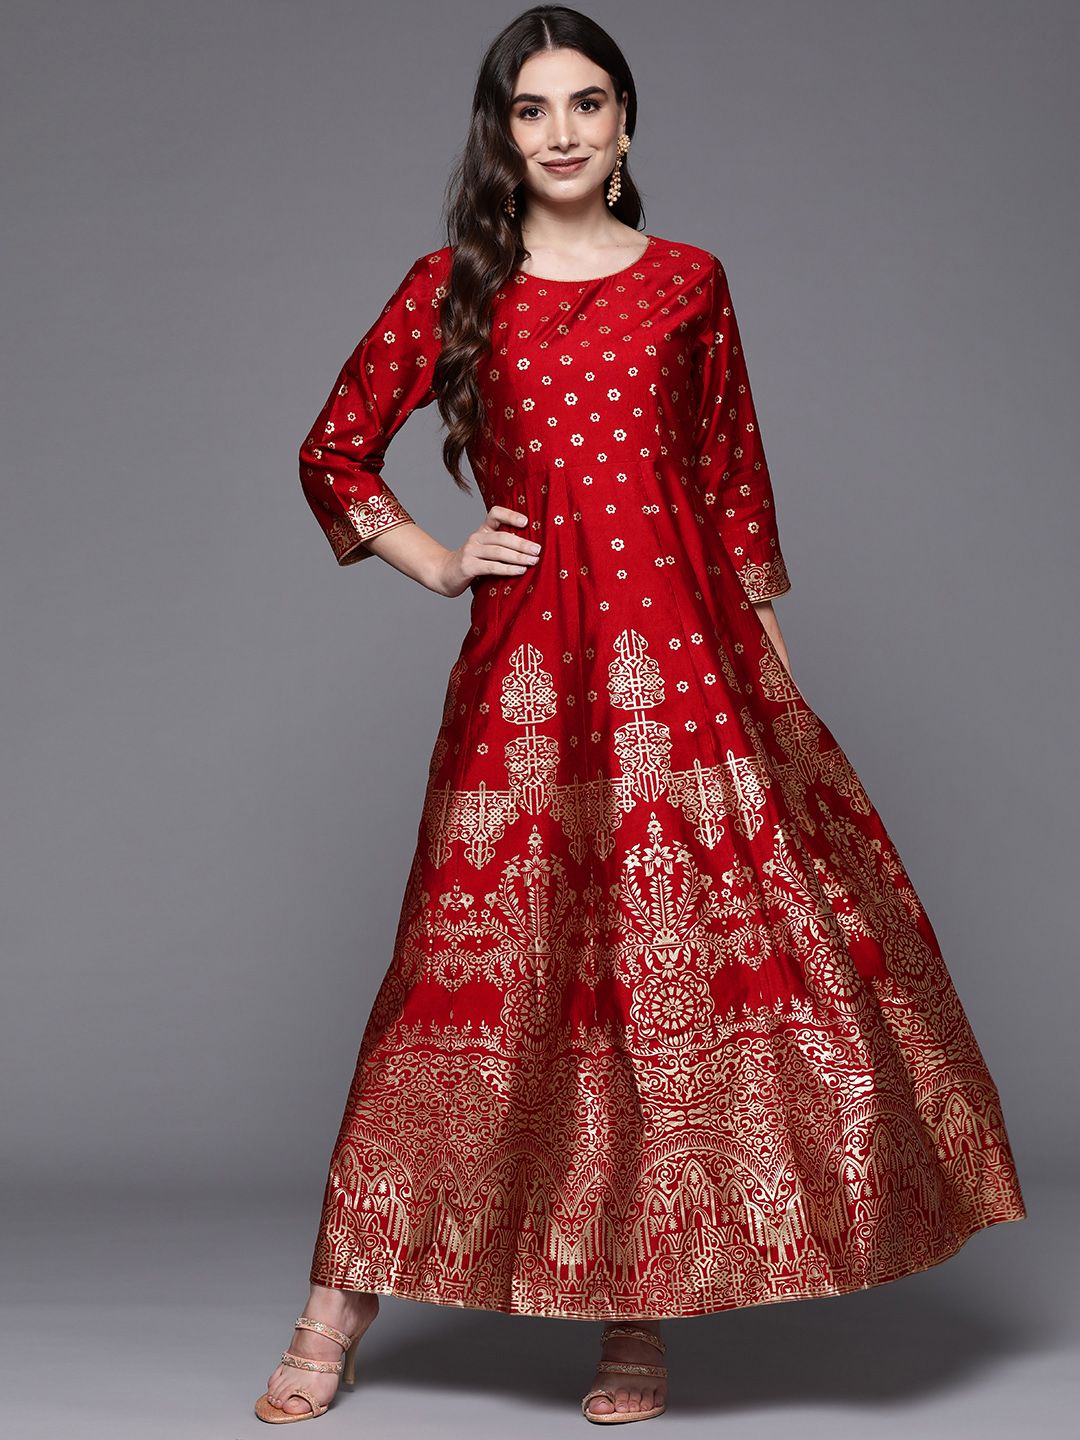 Indo Era Red & Gold-Toned Ethnic Motifs Liva Ethnic A-Line Maxi Dress Price in India